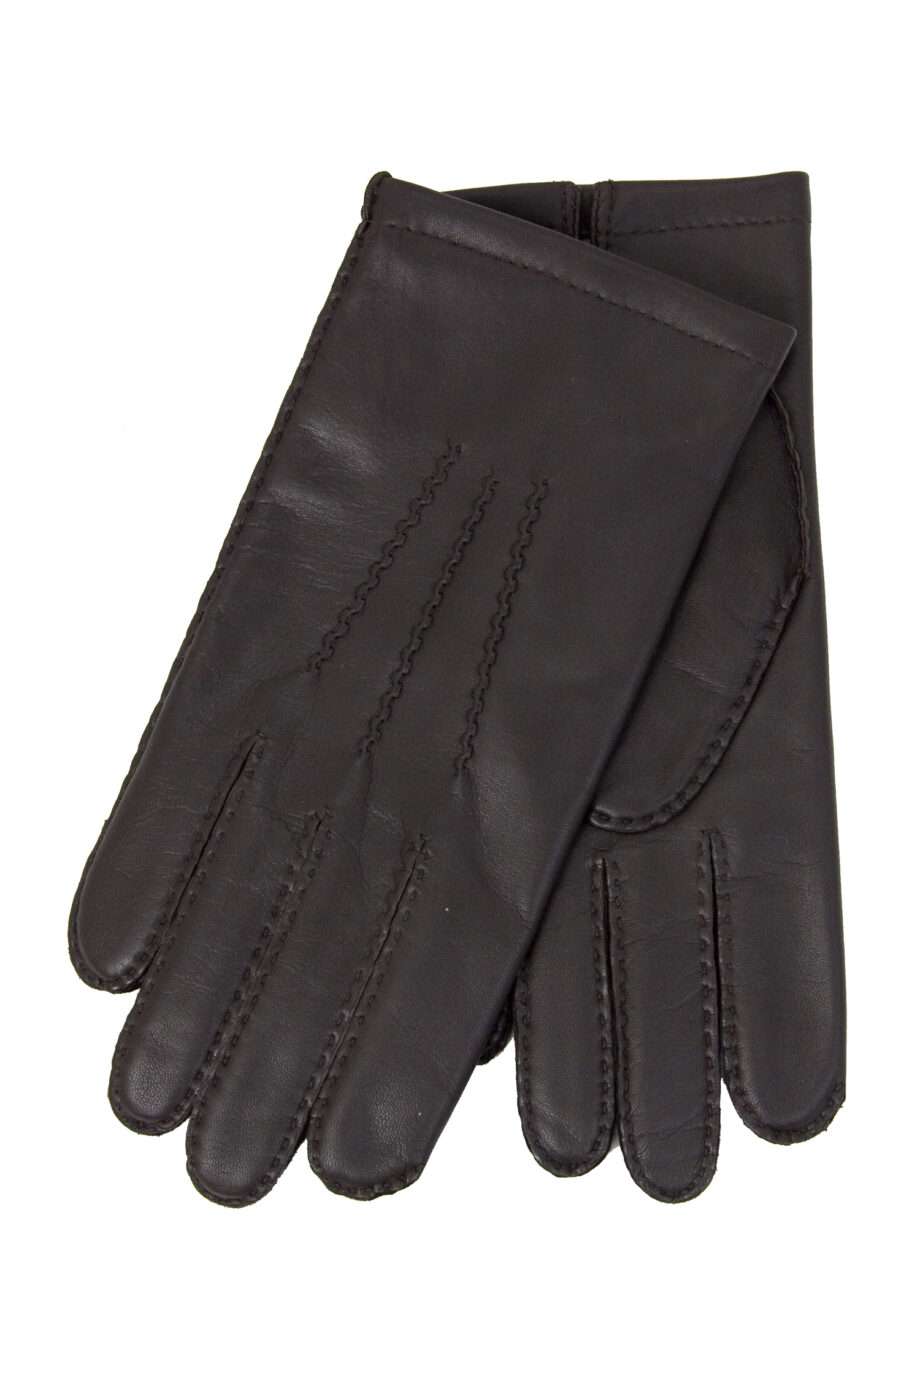 classic choc leather glove (men) large